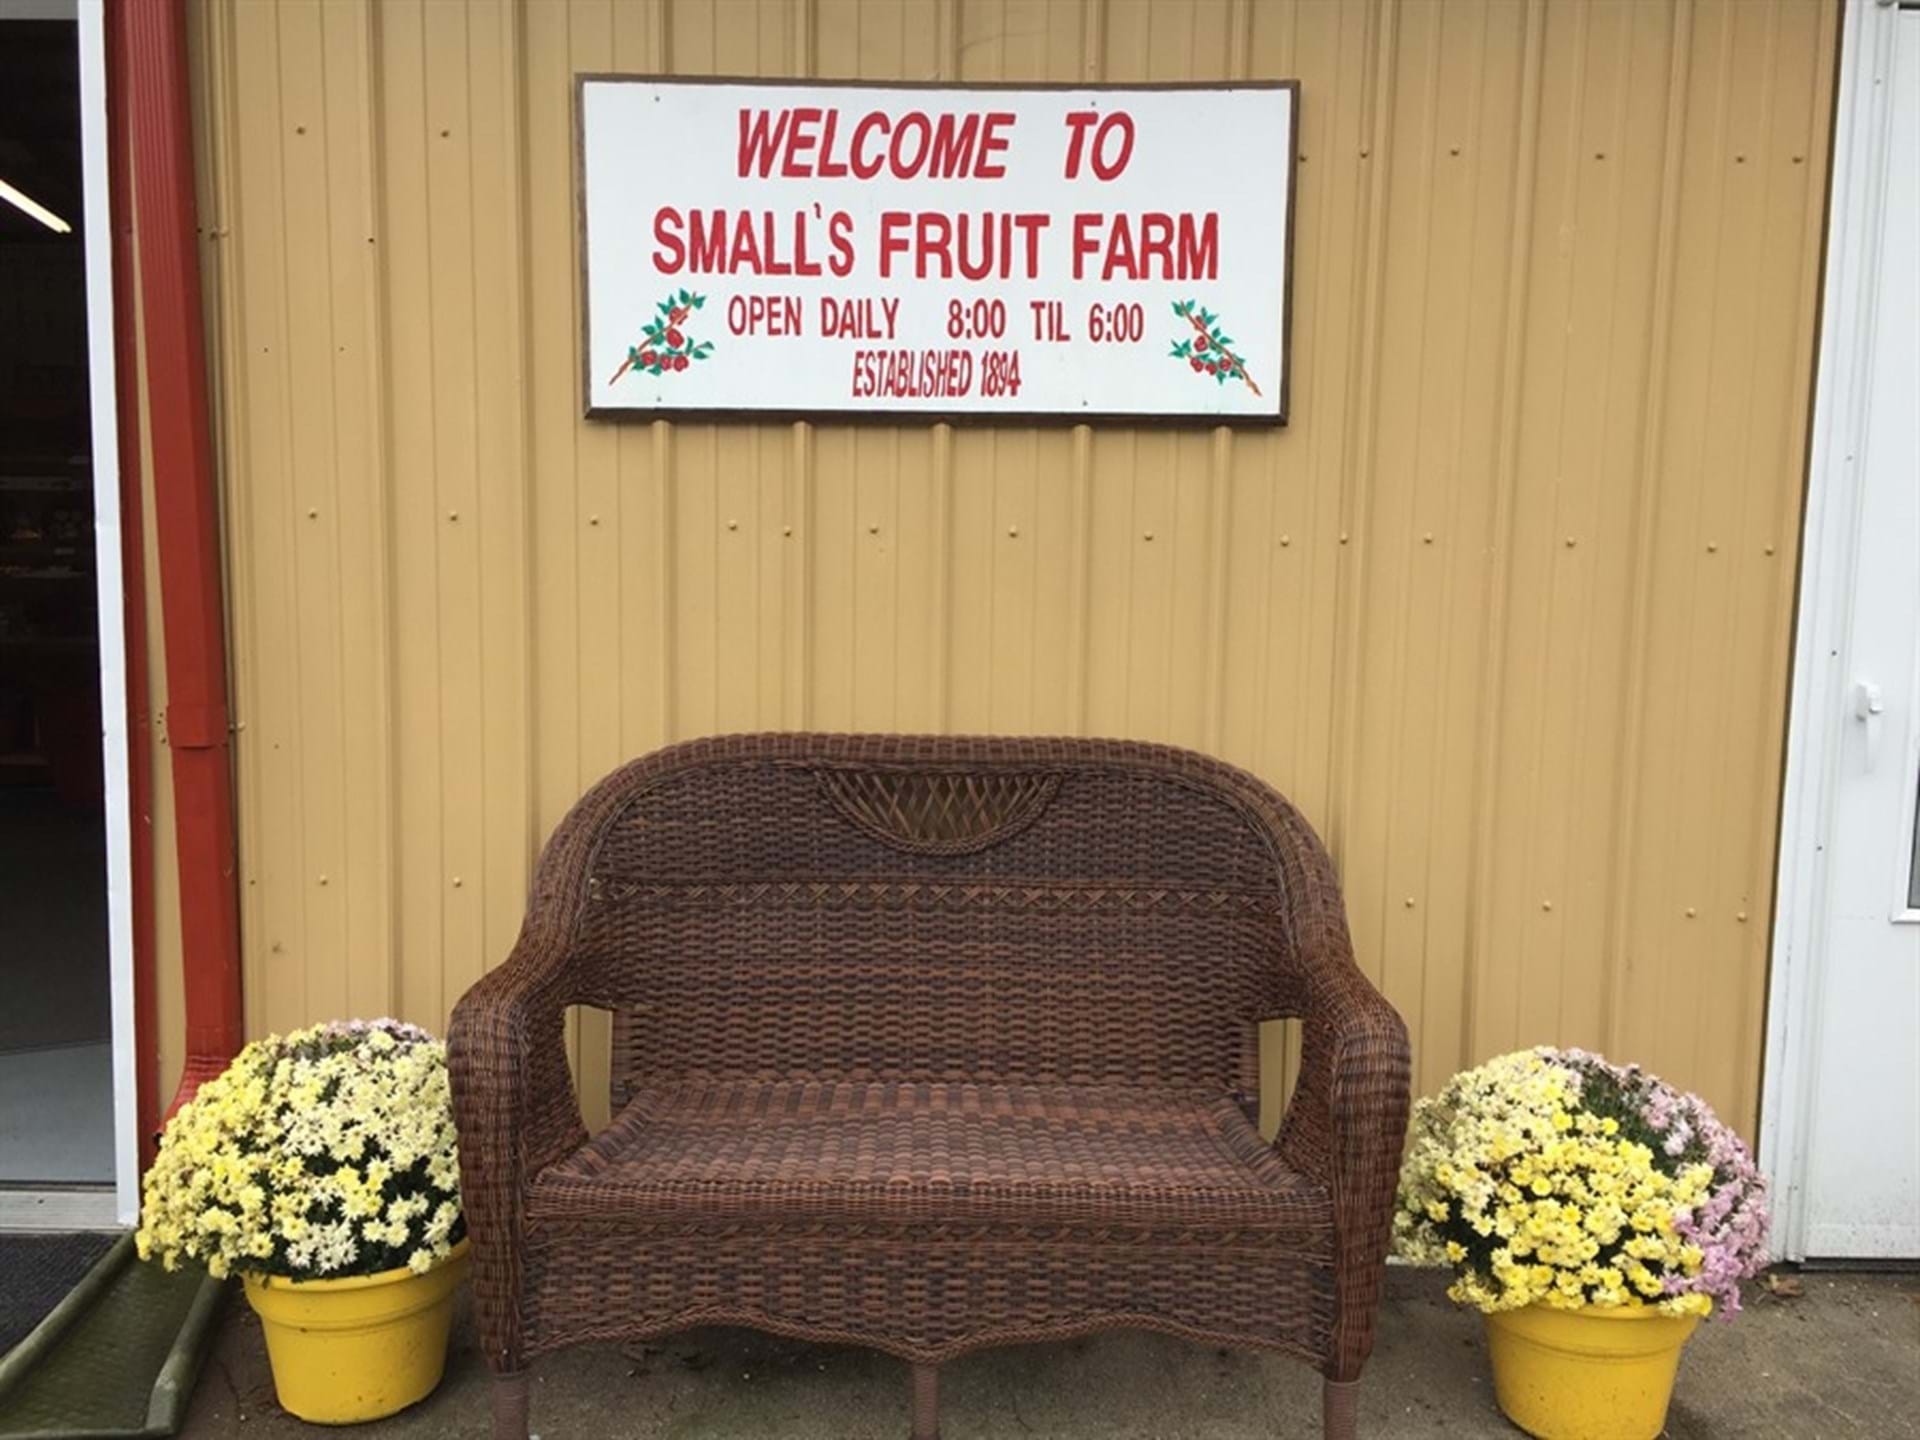 Small's Fruit Farm